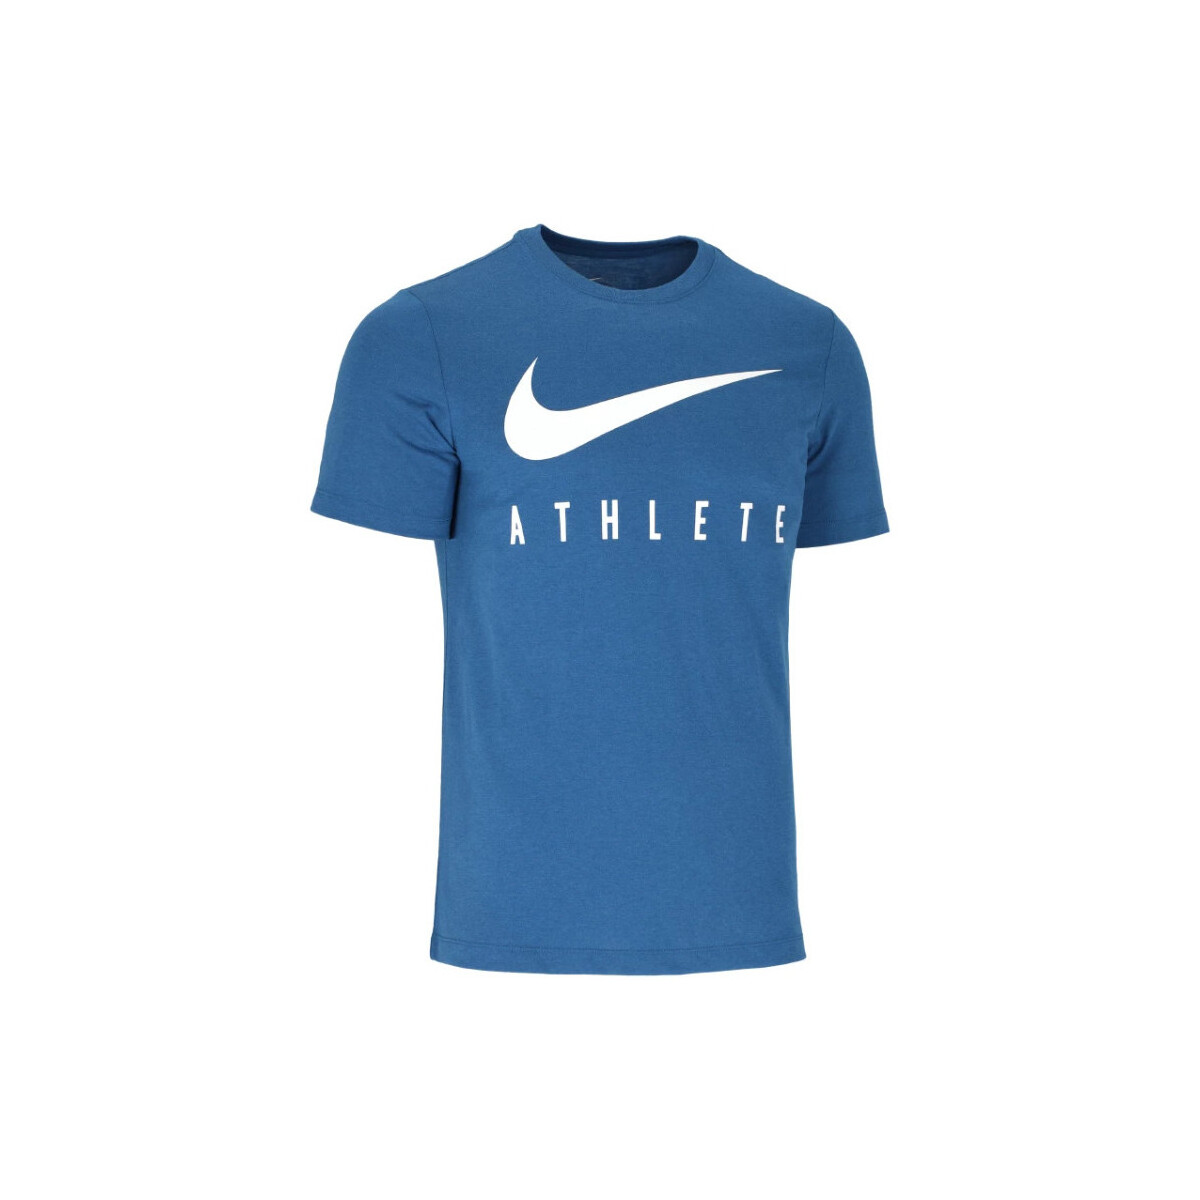 Vêtements Homme T-shirts manches courtes Nike - Tee-shirt col rond - bleu jean Bleu